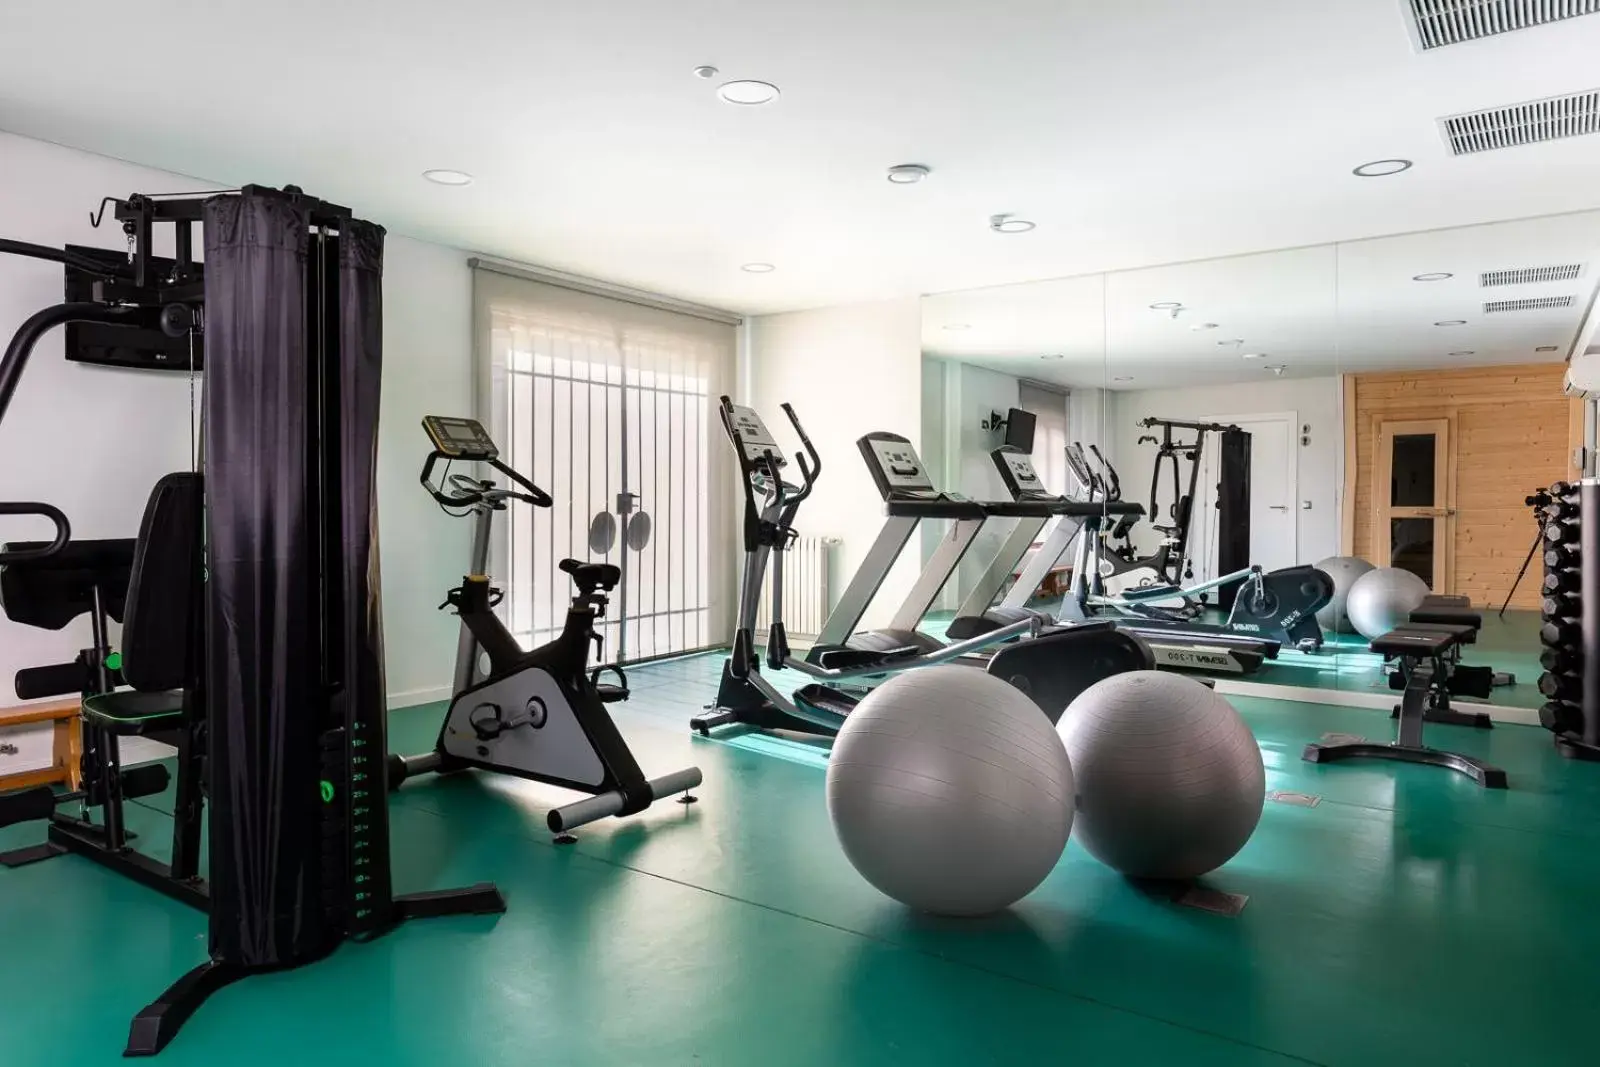 Fitness centre/facilities, Fitness Center/Facilities in Parador de Cuenca